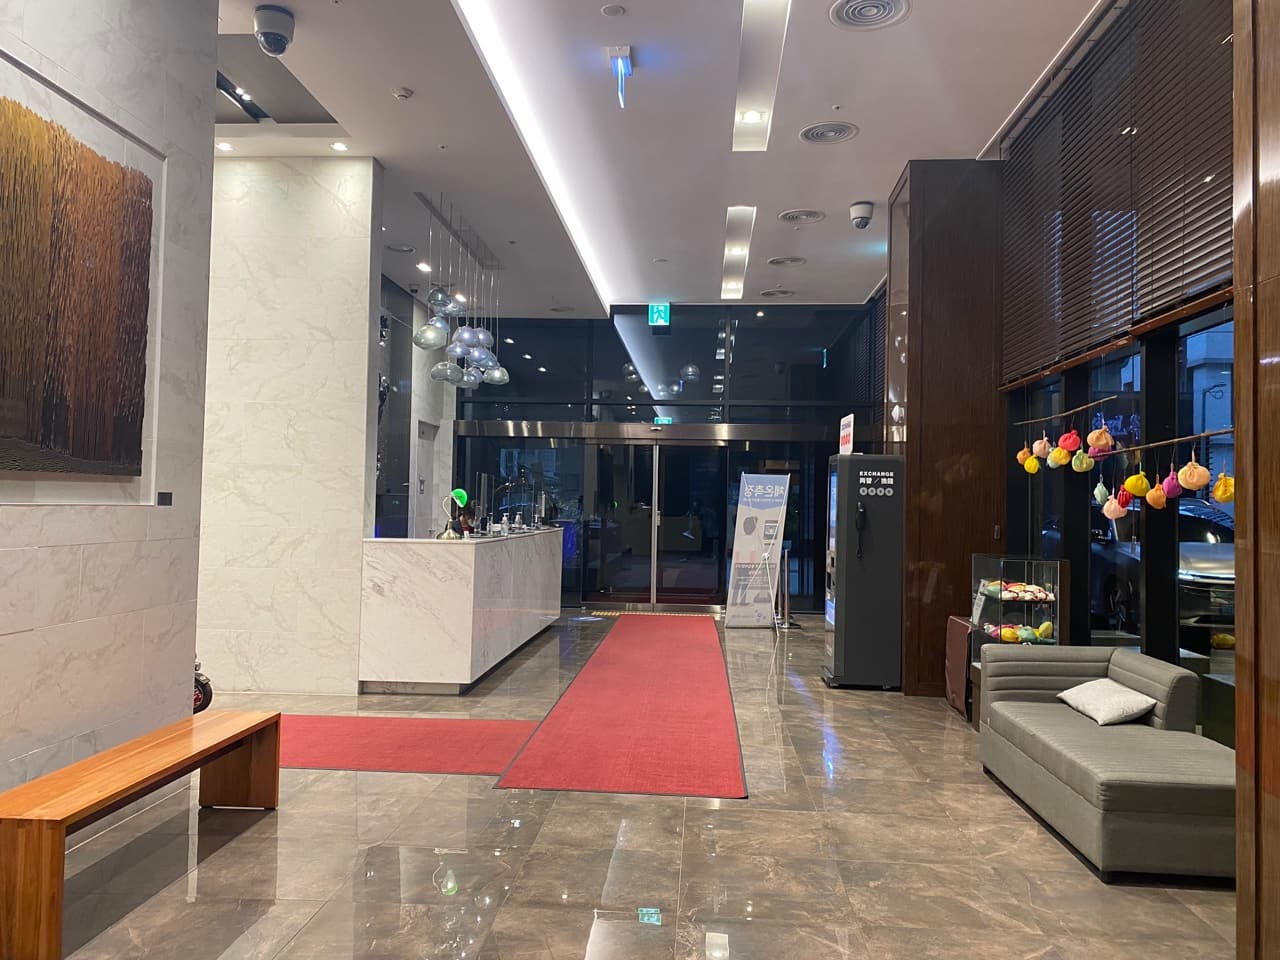 ENA Suite Hotel Namdaemun1 : Hotel lobby with carpet along the walkway